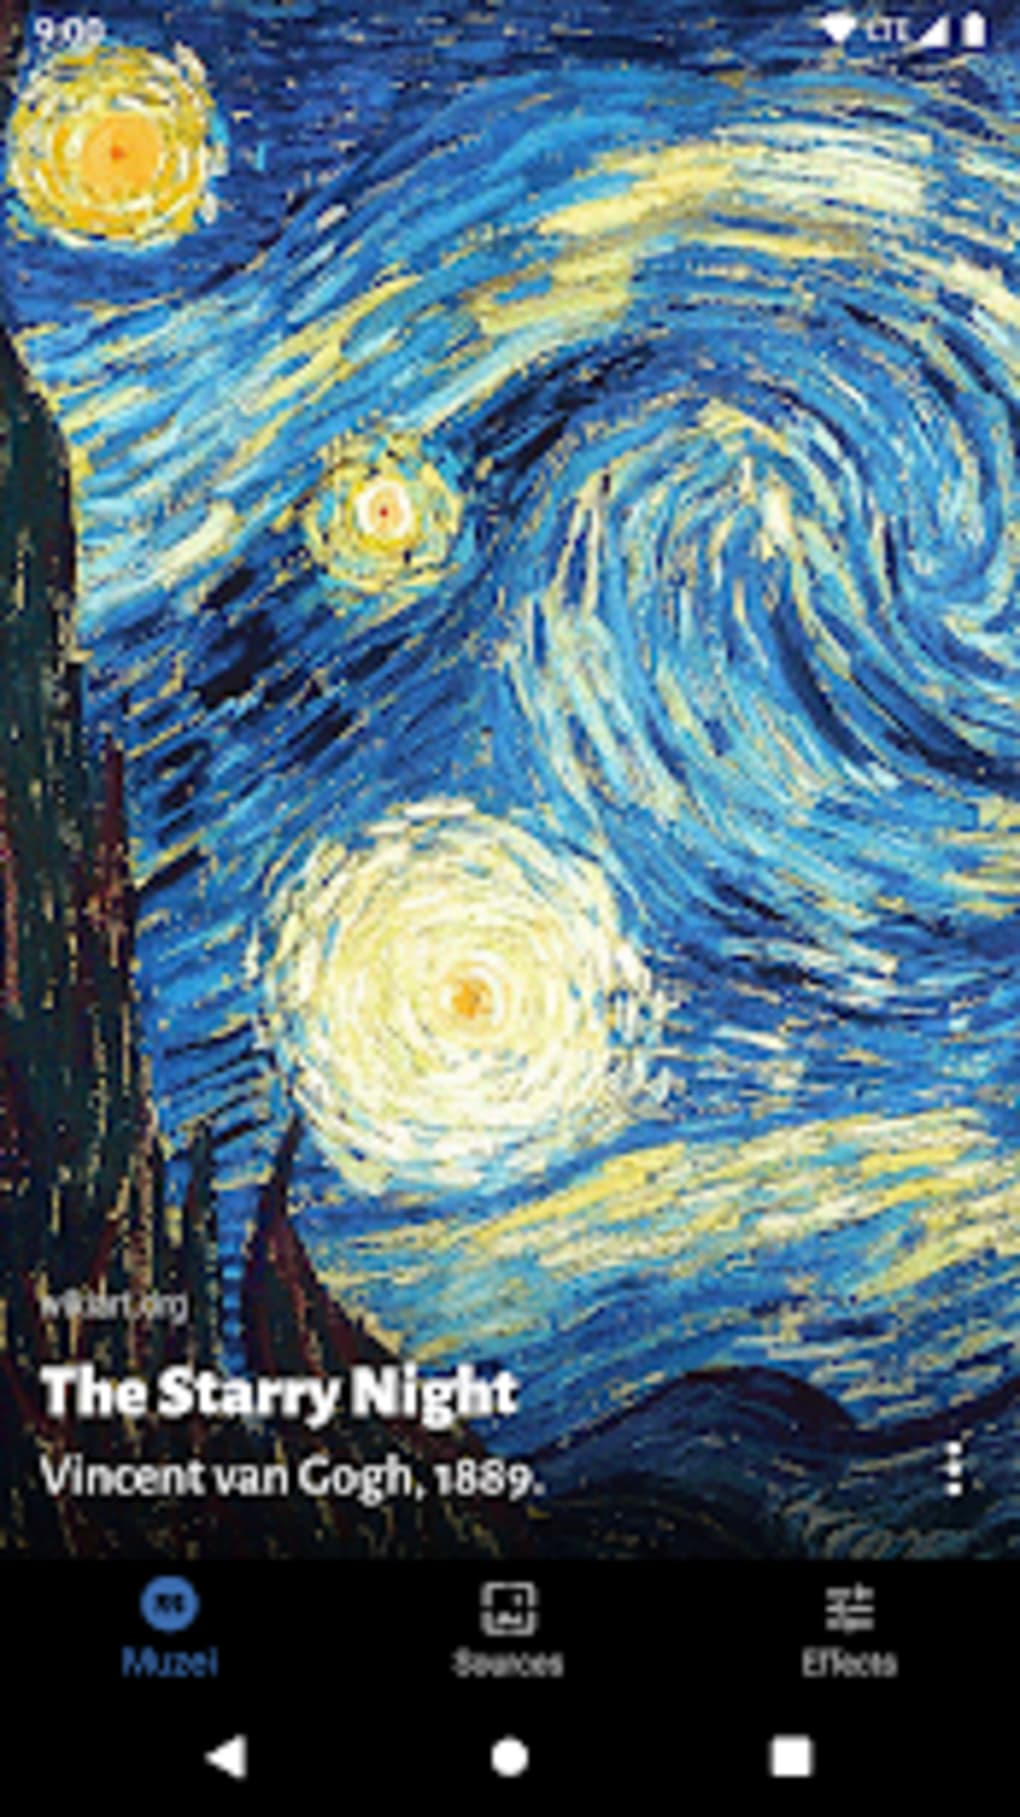 Muzei Live Wallpaper - Starry Night Van Gogh Wallpaper Hd - HD Wallpaper 